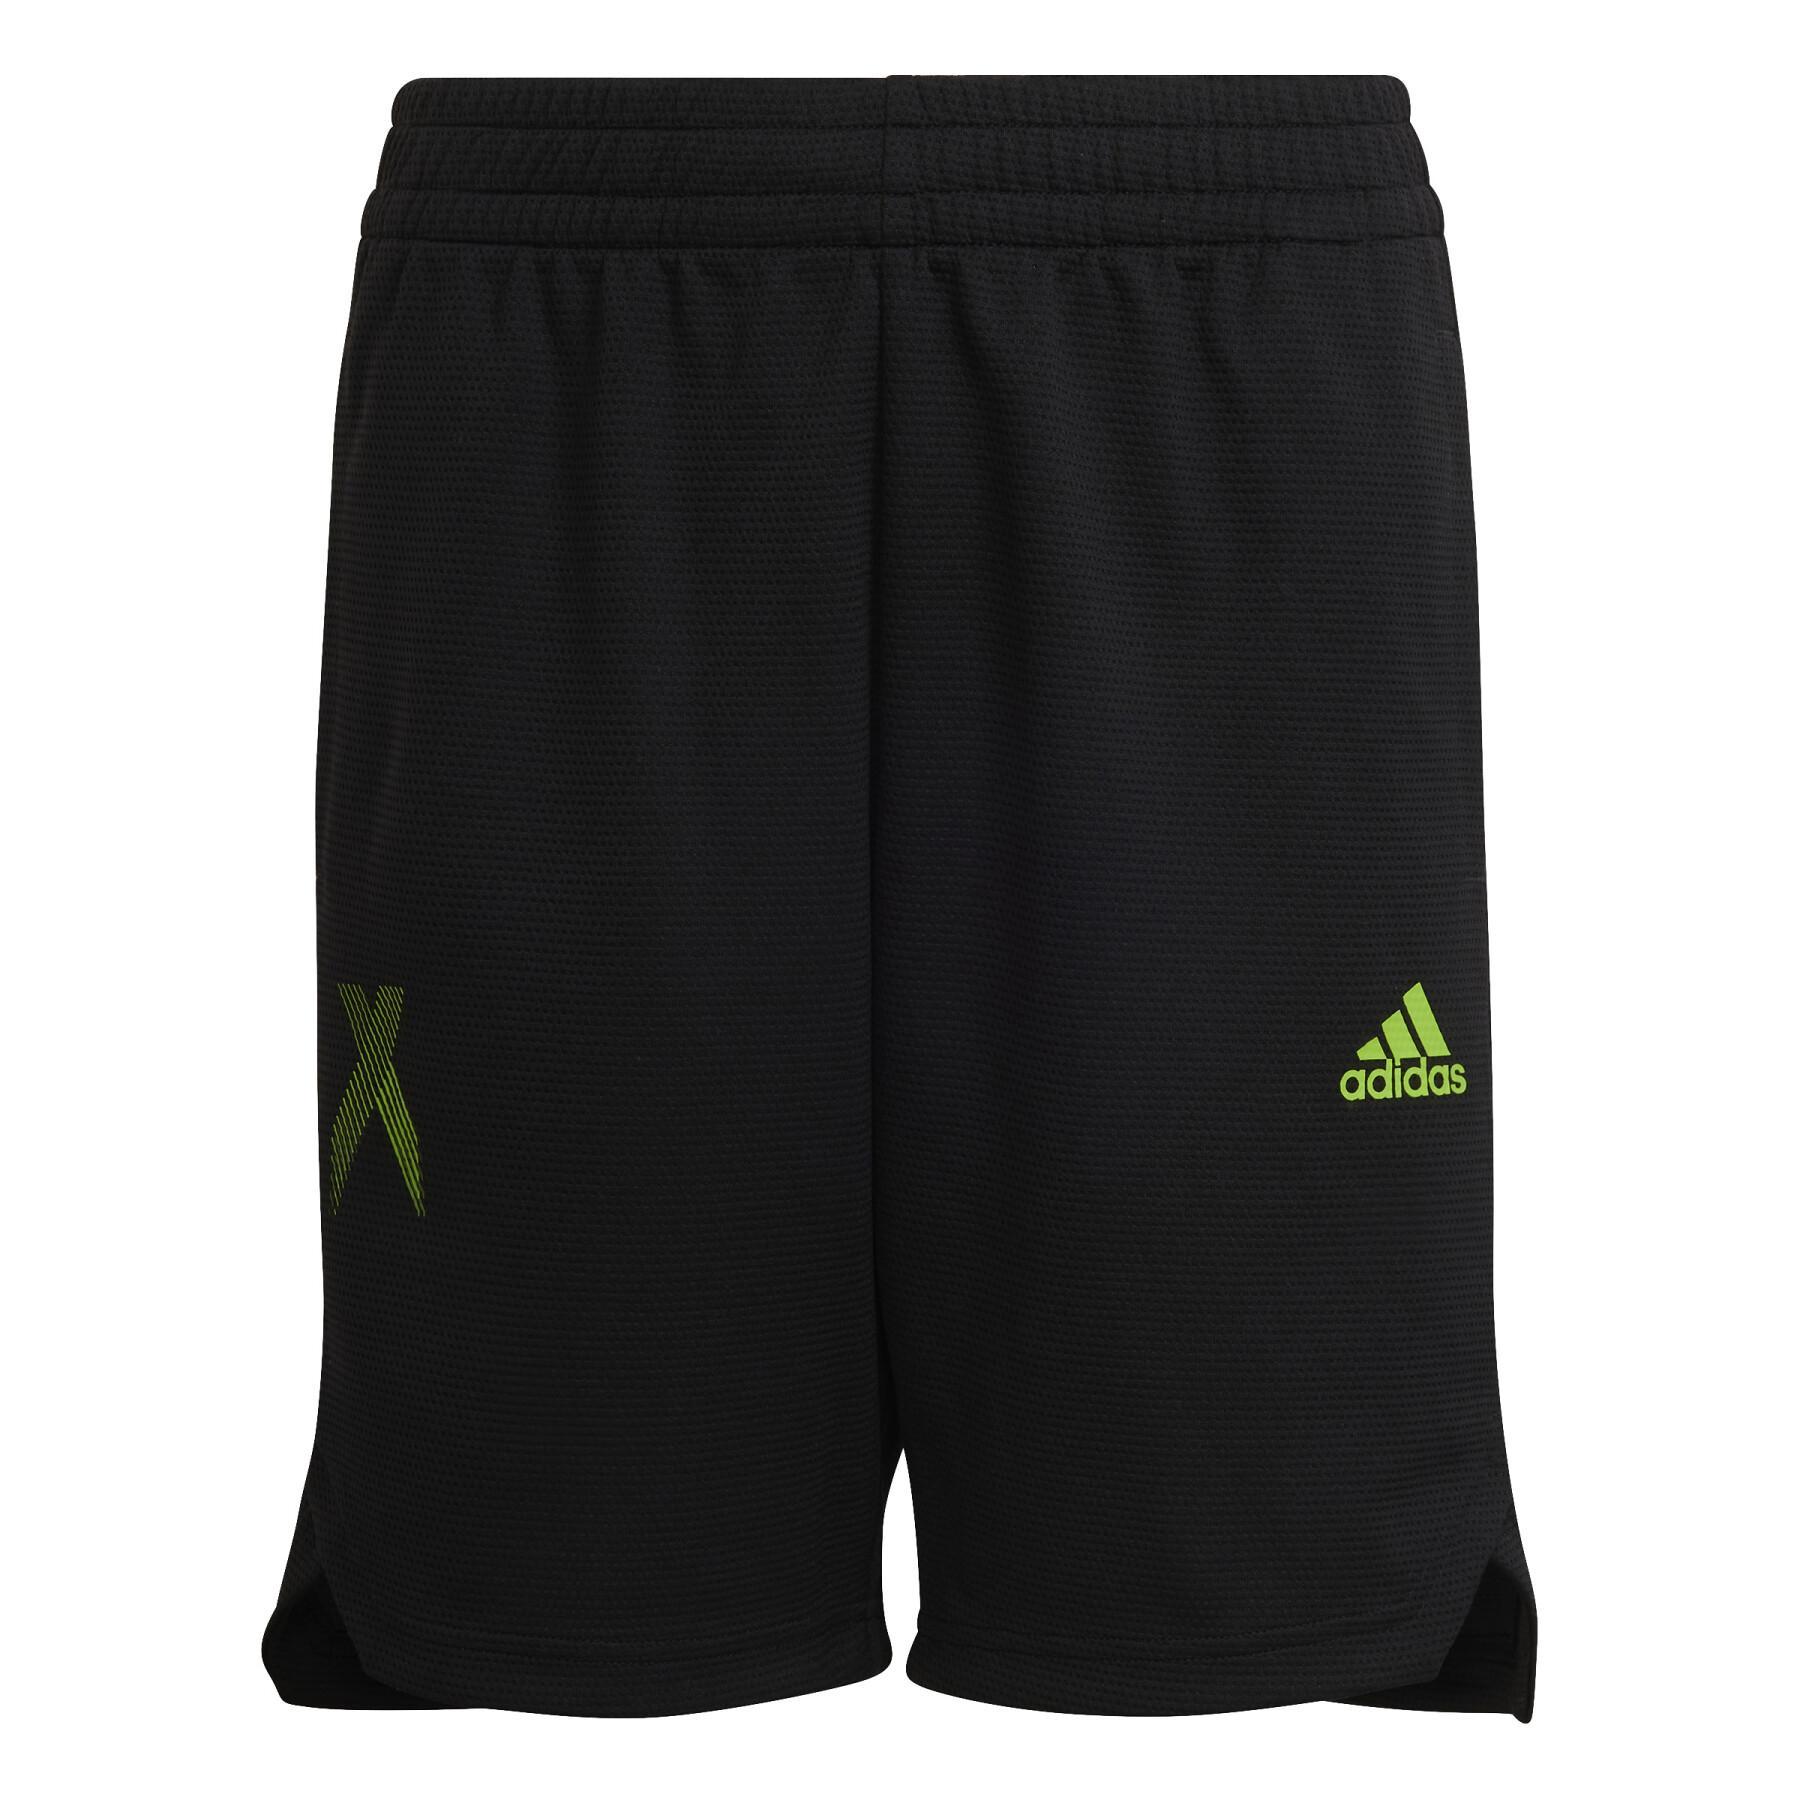 Children's shorts adidas Football-Inspired X